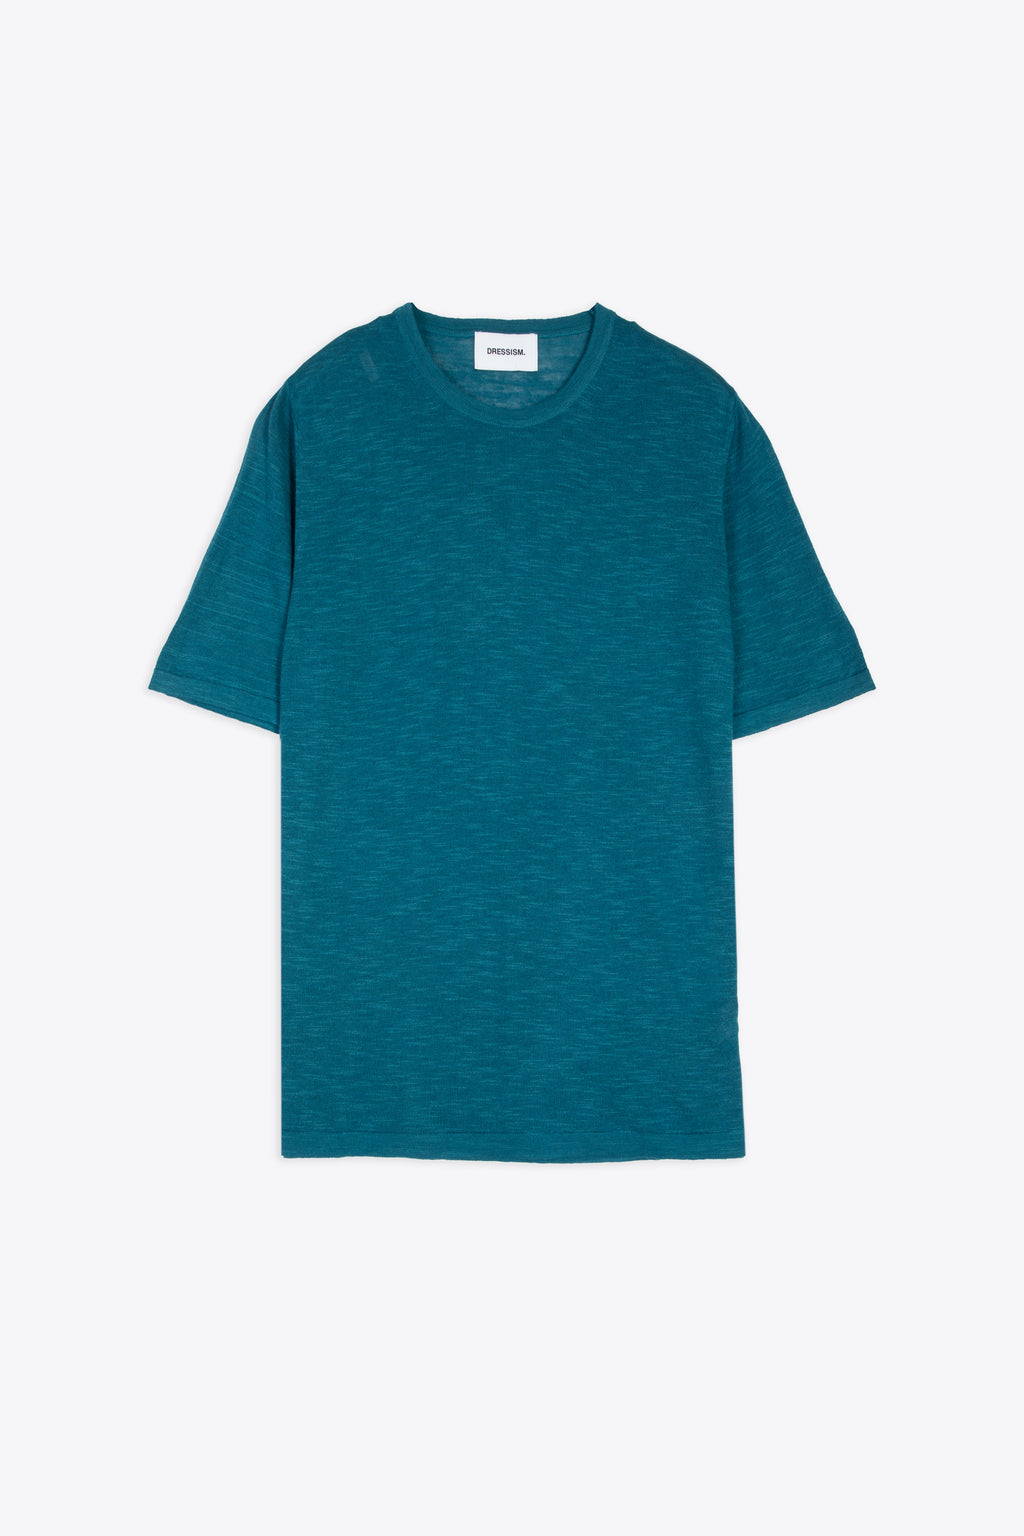 alt-image__Teal-blue-linen-blend-t-shirt